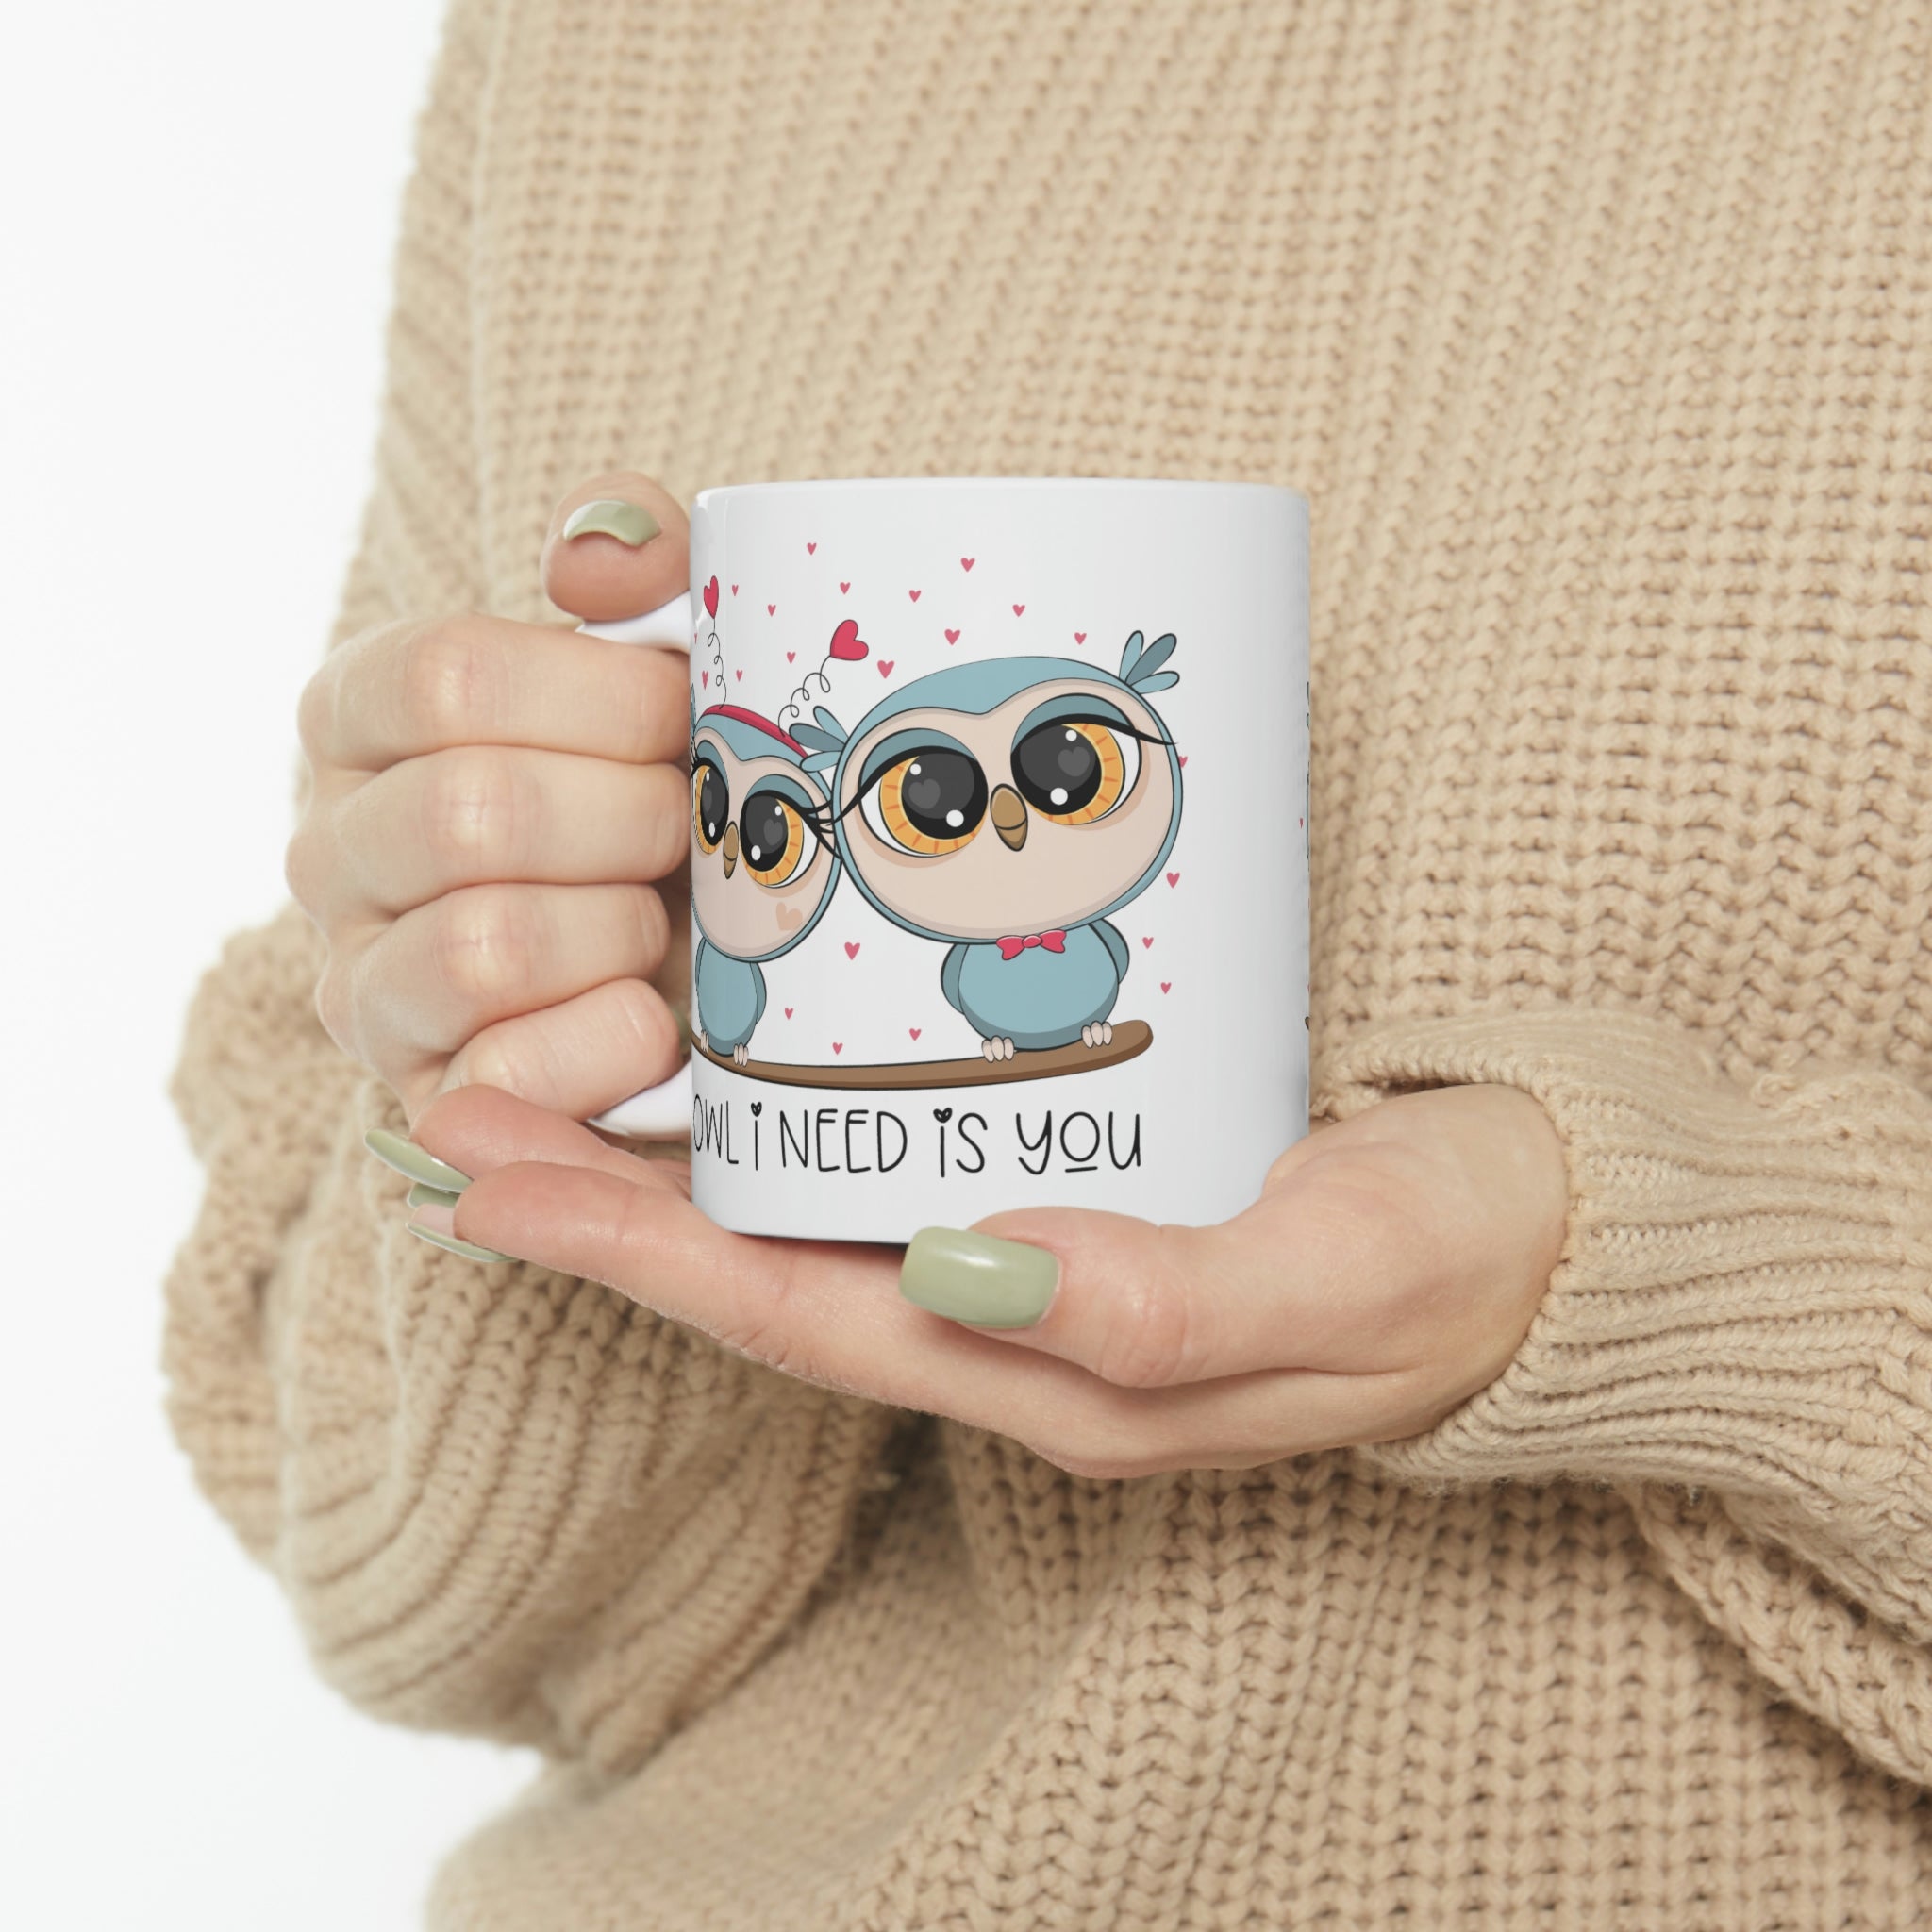 Owl Coffee Mug Owl I Need Is You Owl Couple Coffee Cup 11 ounce Tea Cup